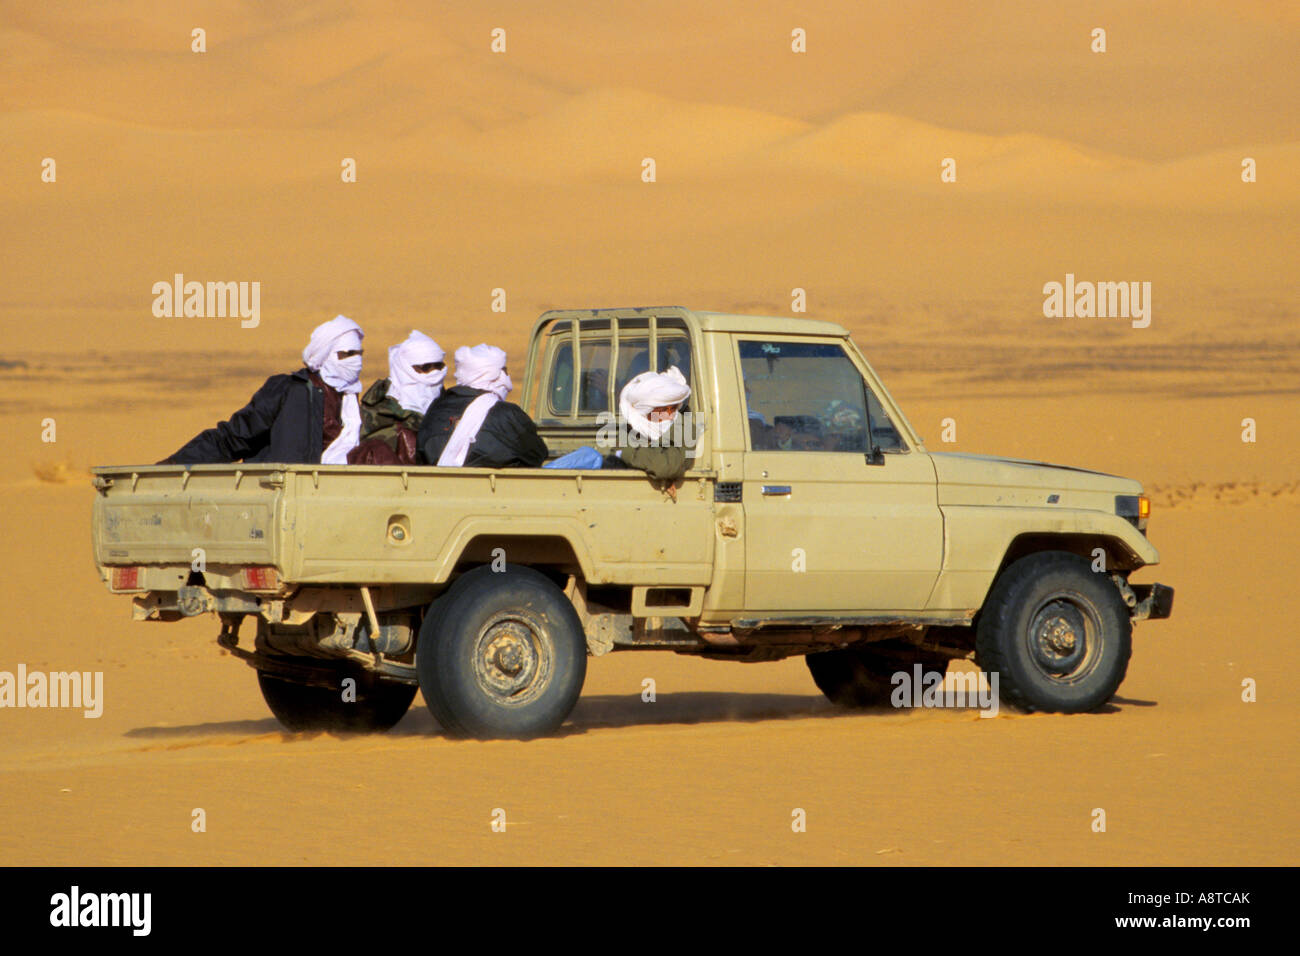 Tuaregs su un quattro per quattro, Libia, Sahara Foto Stock